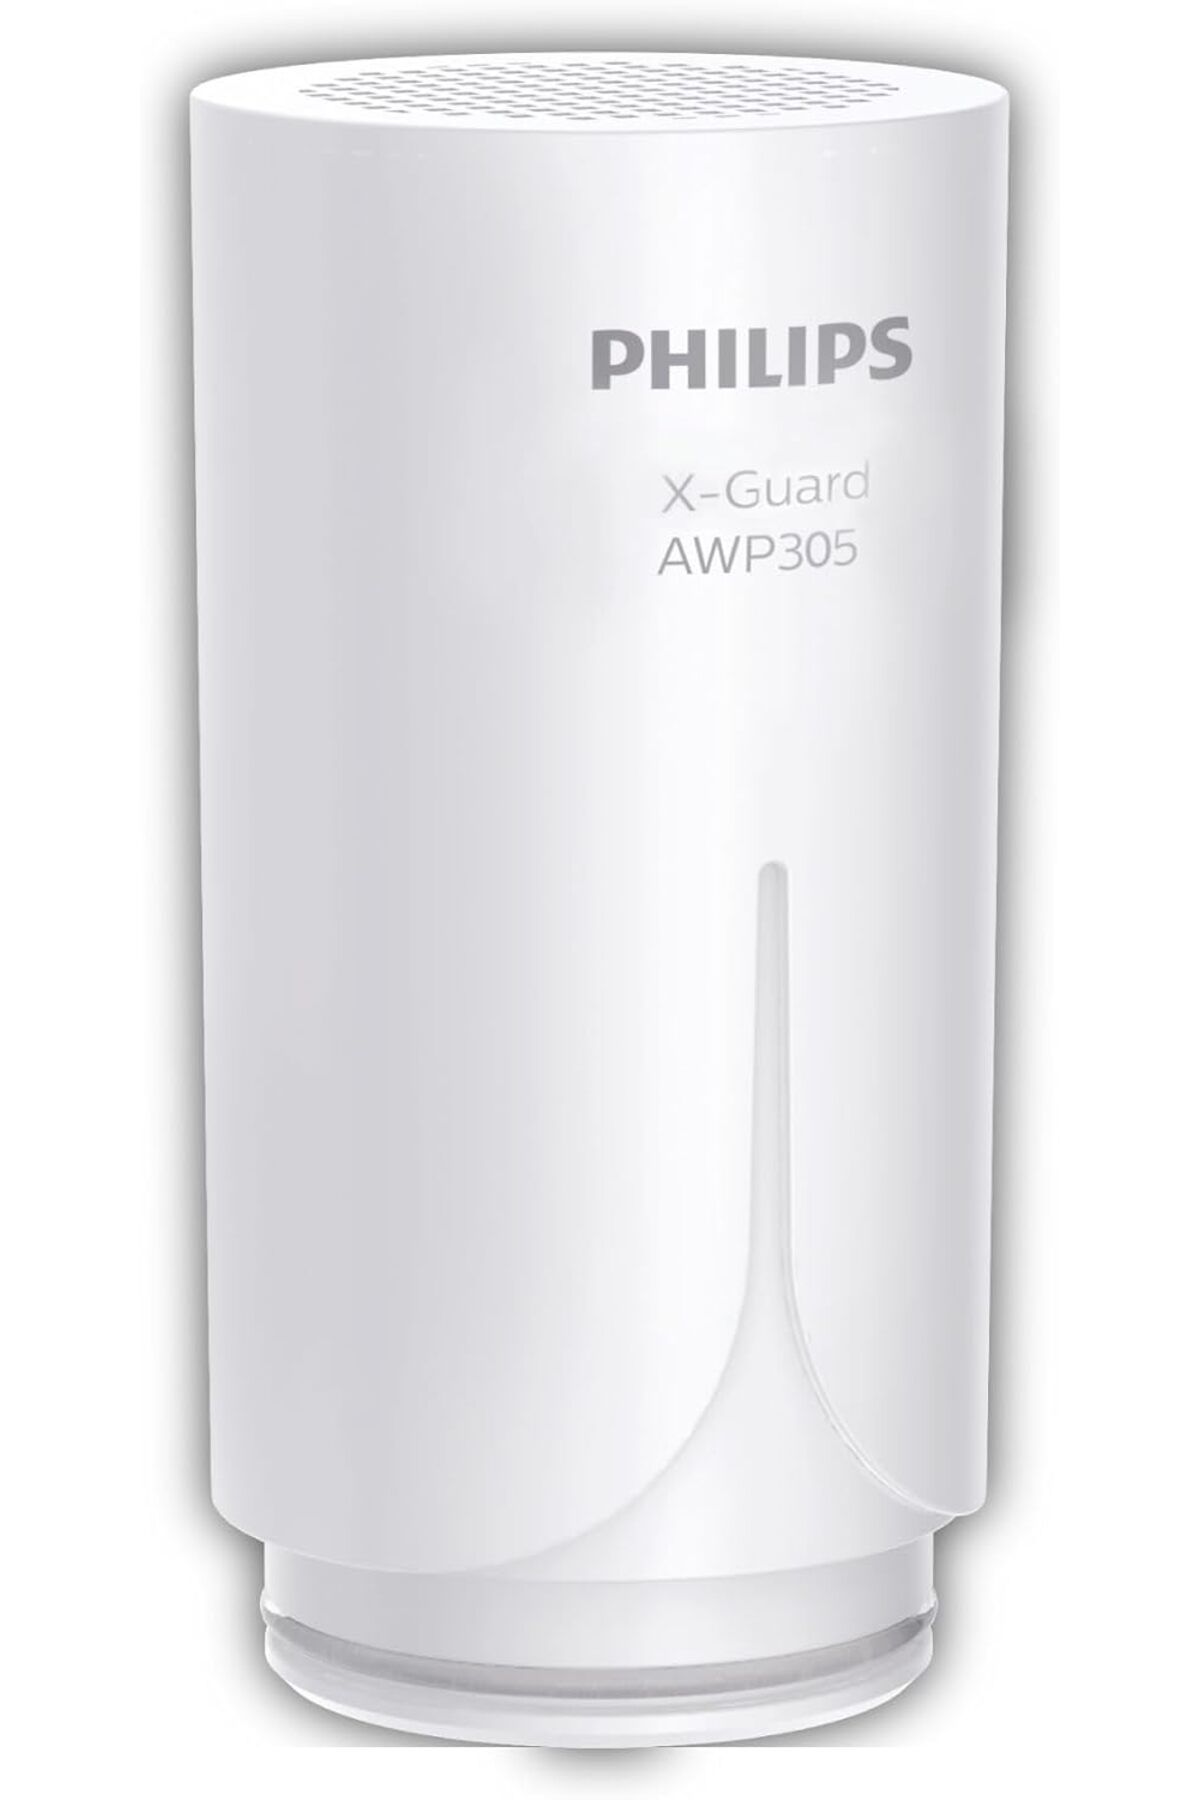 Philips Water X-Guard Musluk Suyu Mikrofiltrasyon Filtre Kartuşu